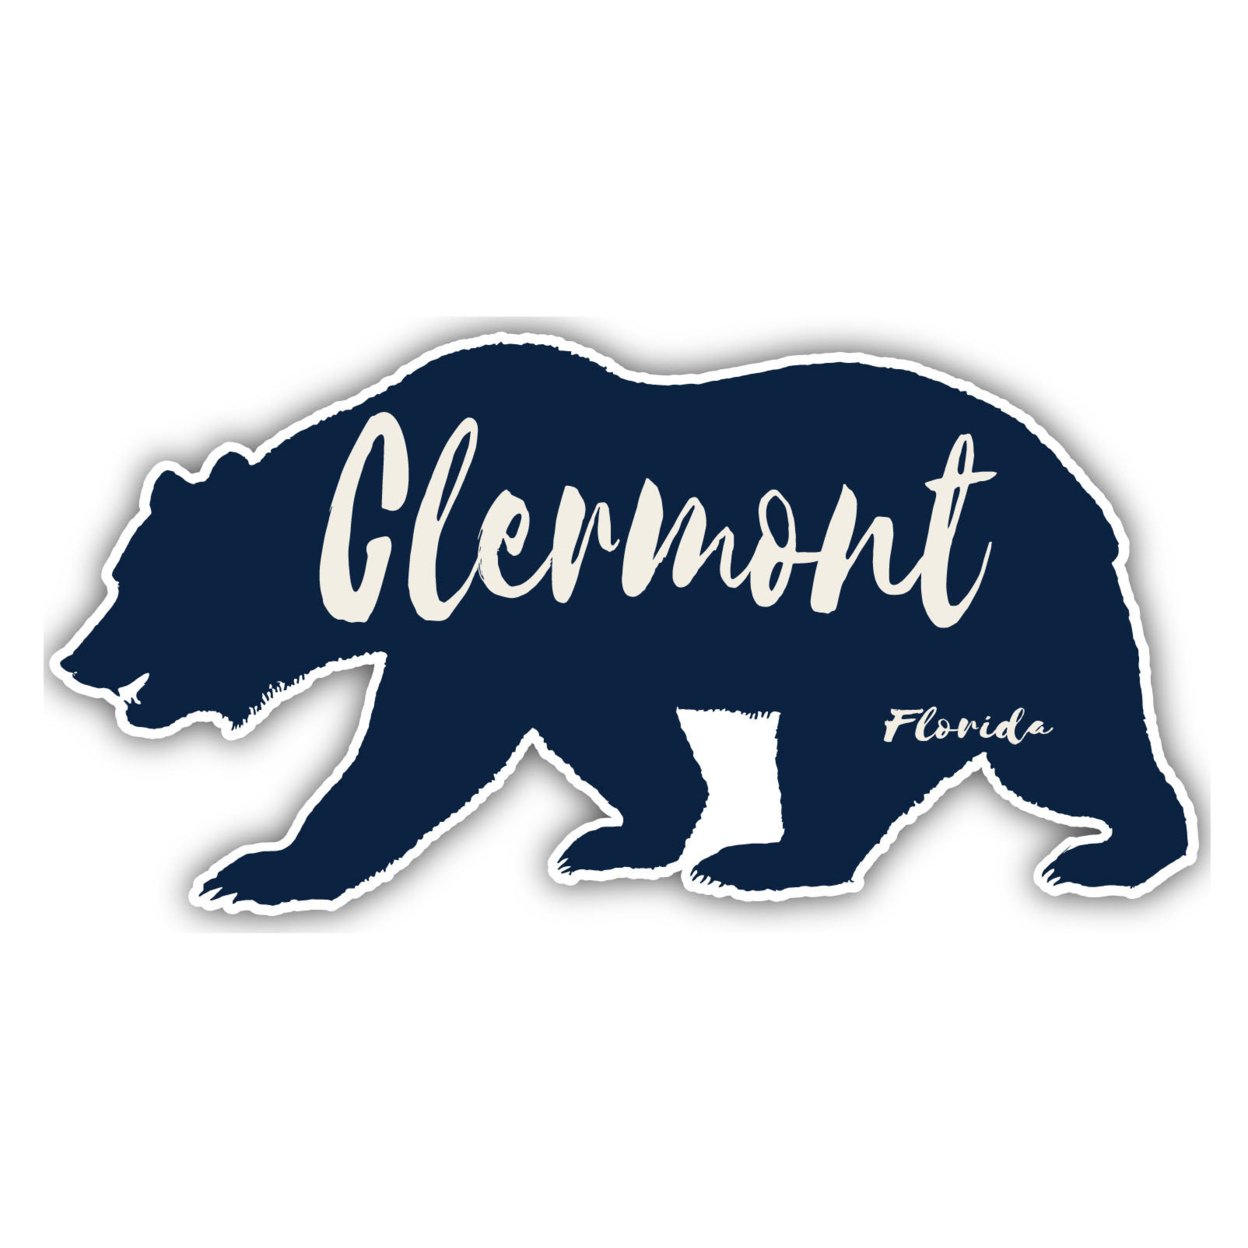 Clermont Florida Souvenir Decorative Stickers (Choose Theme And Size) - Single Unit, 4-Inch, Bear